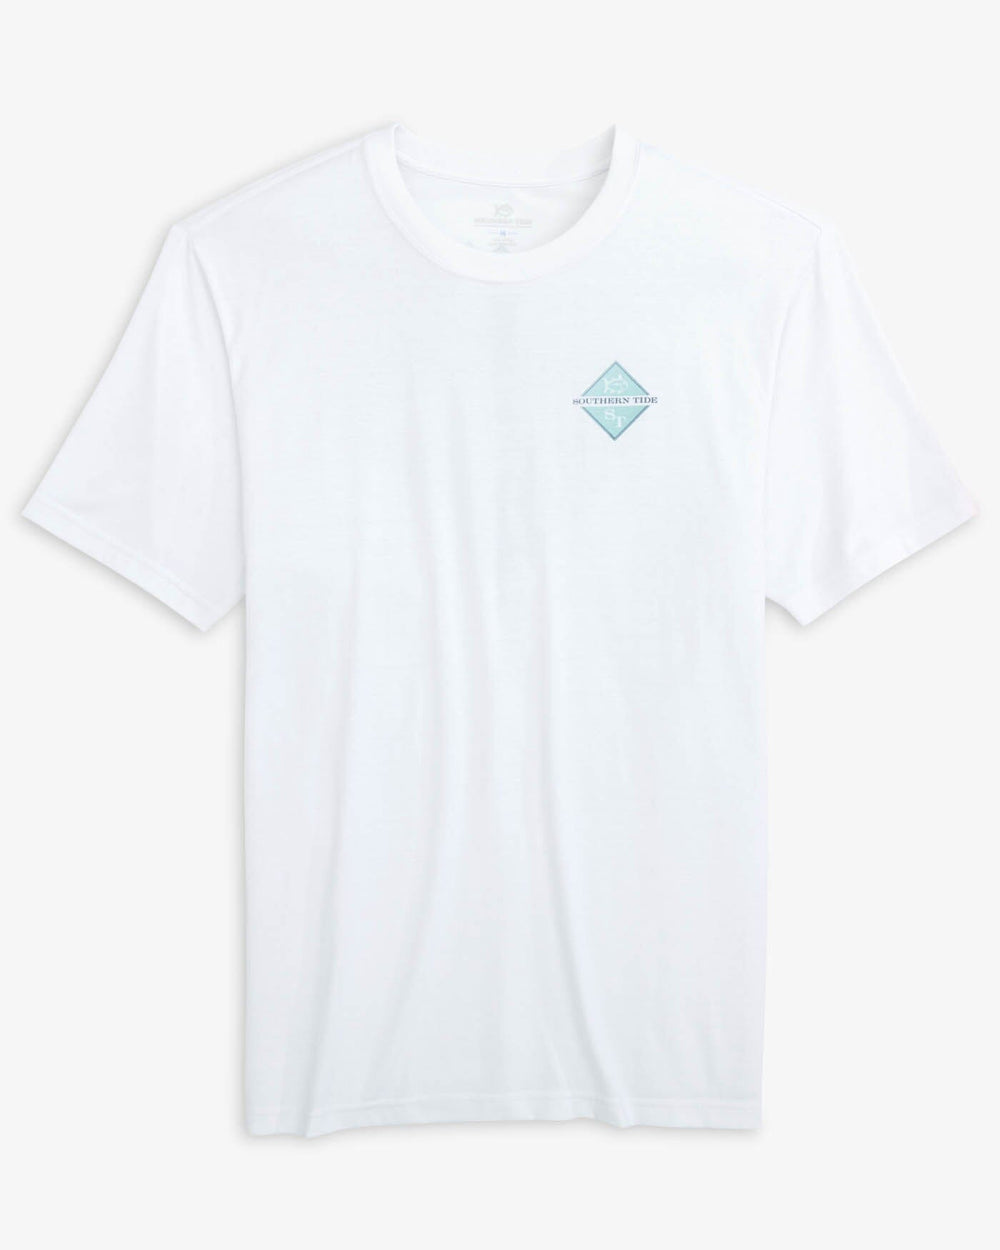 Men's Diamond Sailing T-shirt | Southern Tide